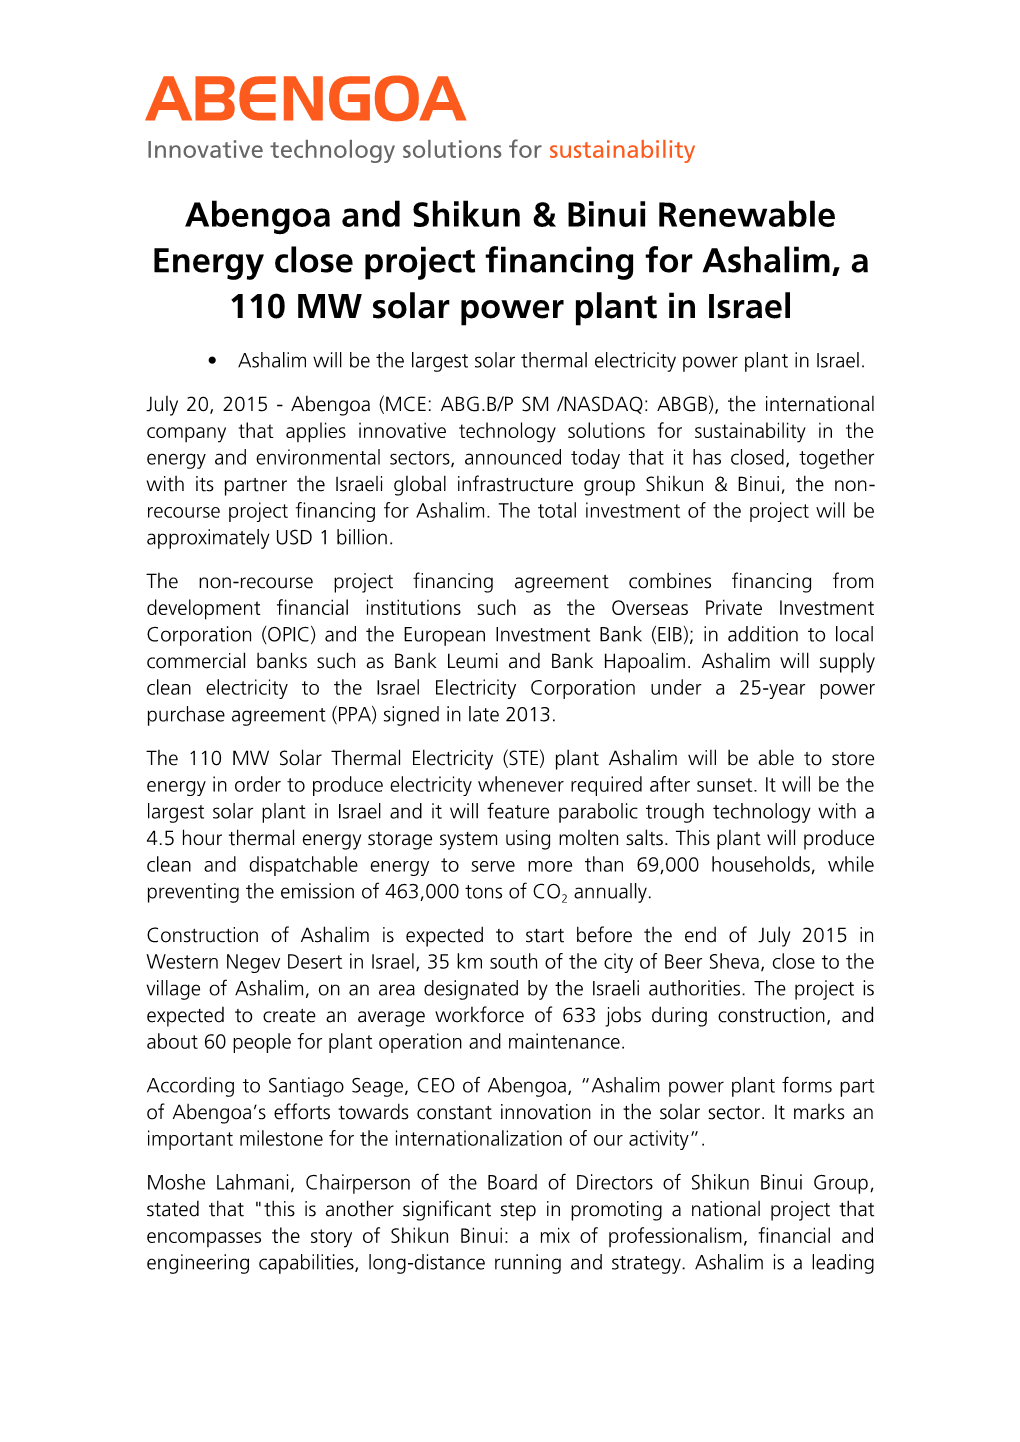 Abengoa and Shikun & Binui Renewable Energy Close Project